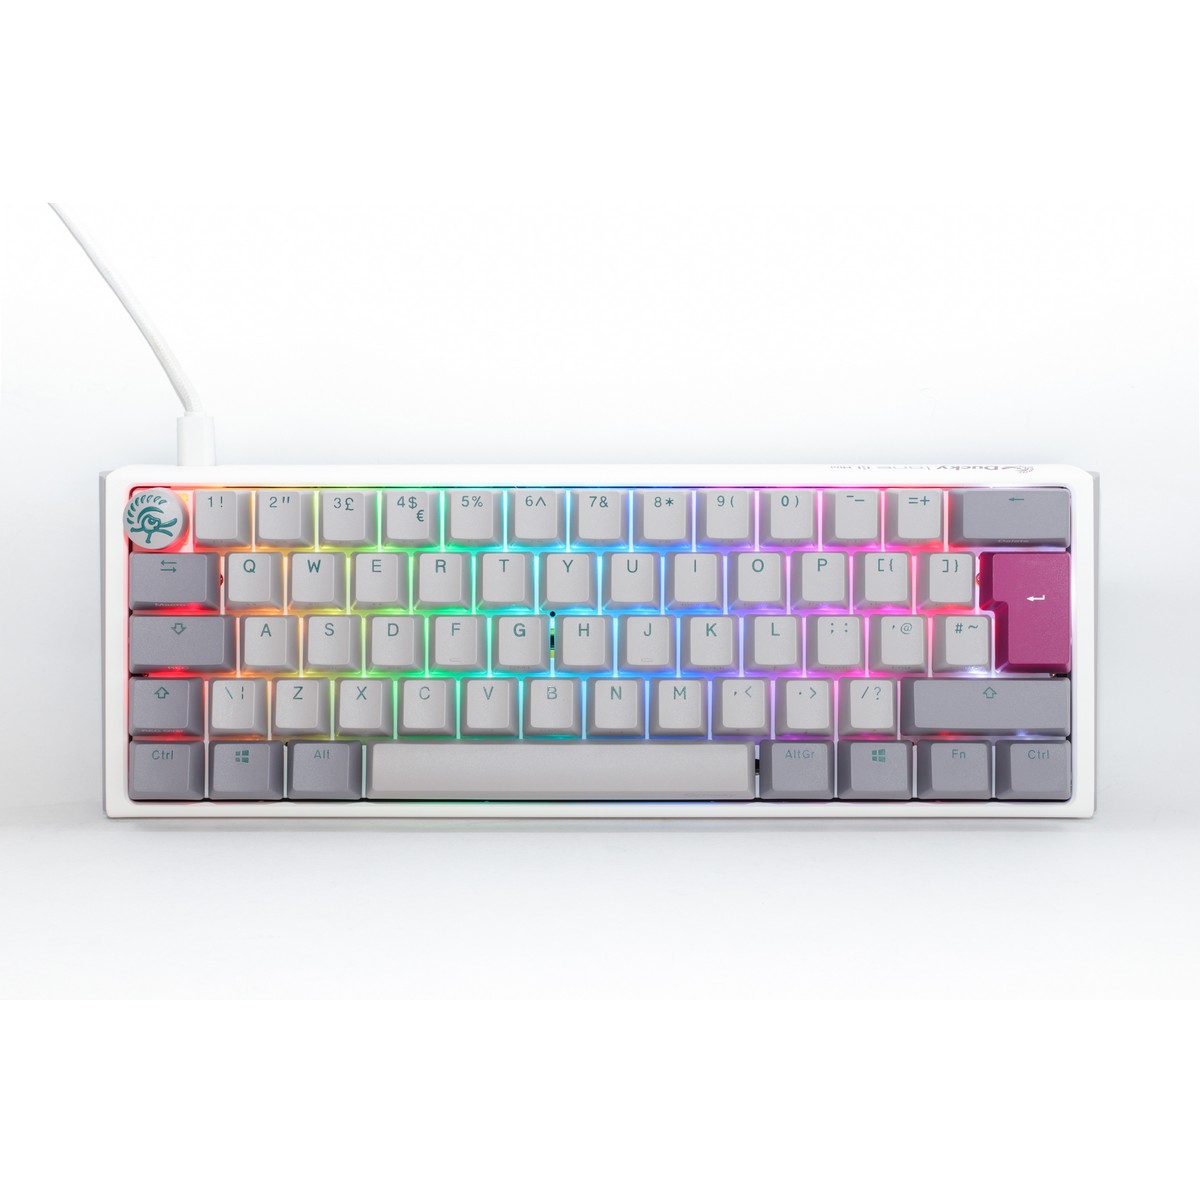 Ducky One 3 Mist Mini 60% USB RGB Mechanical Gaming Keyboard Cherry MX Red Switch - UK Layout